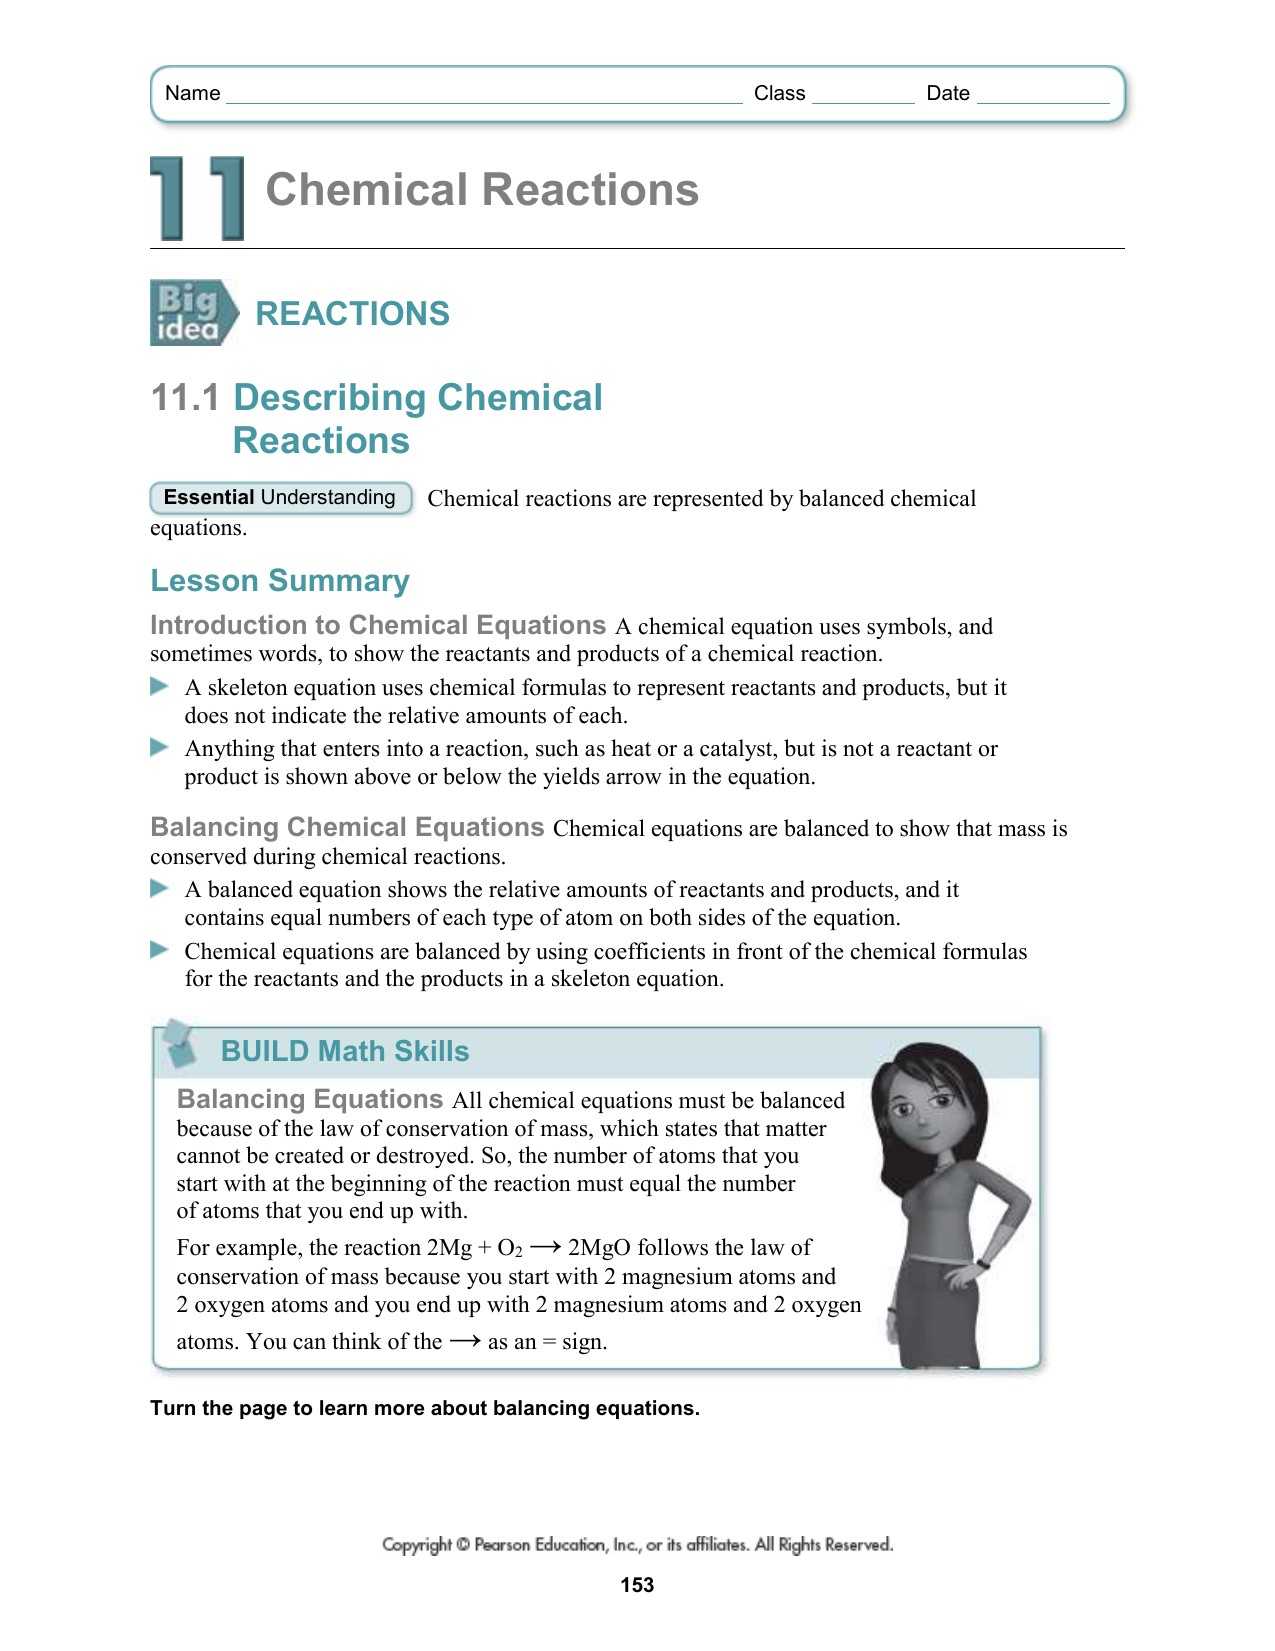 Classifying Chemical Reactions Worksheet Answers with Chemical Reactions Worksheet Answers Choice Image Worksheet Math